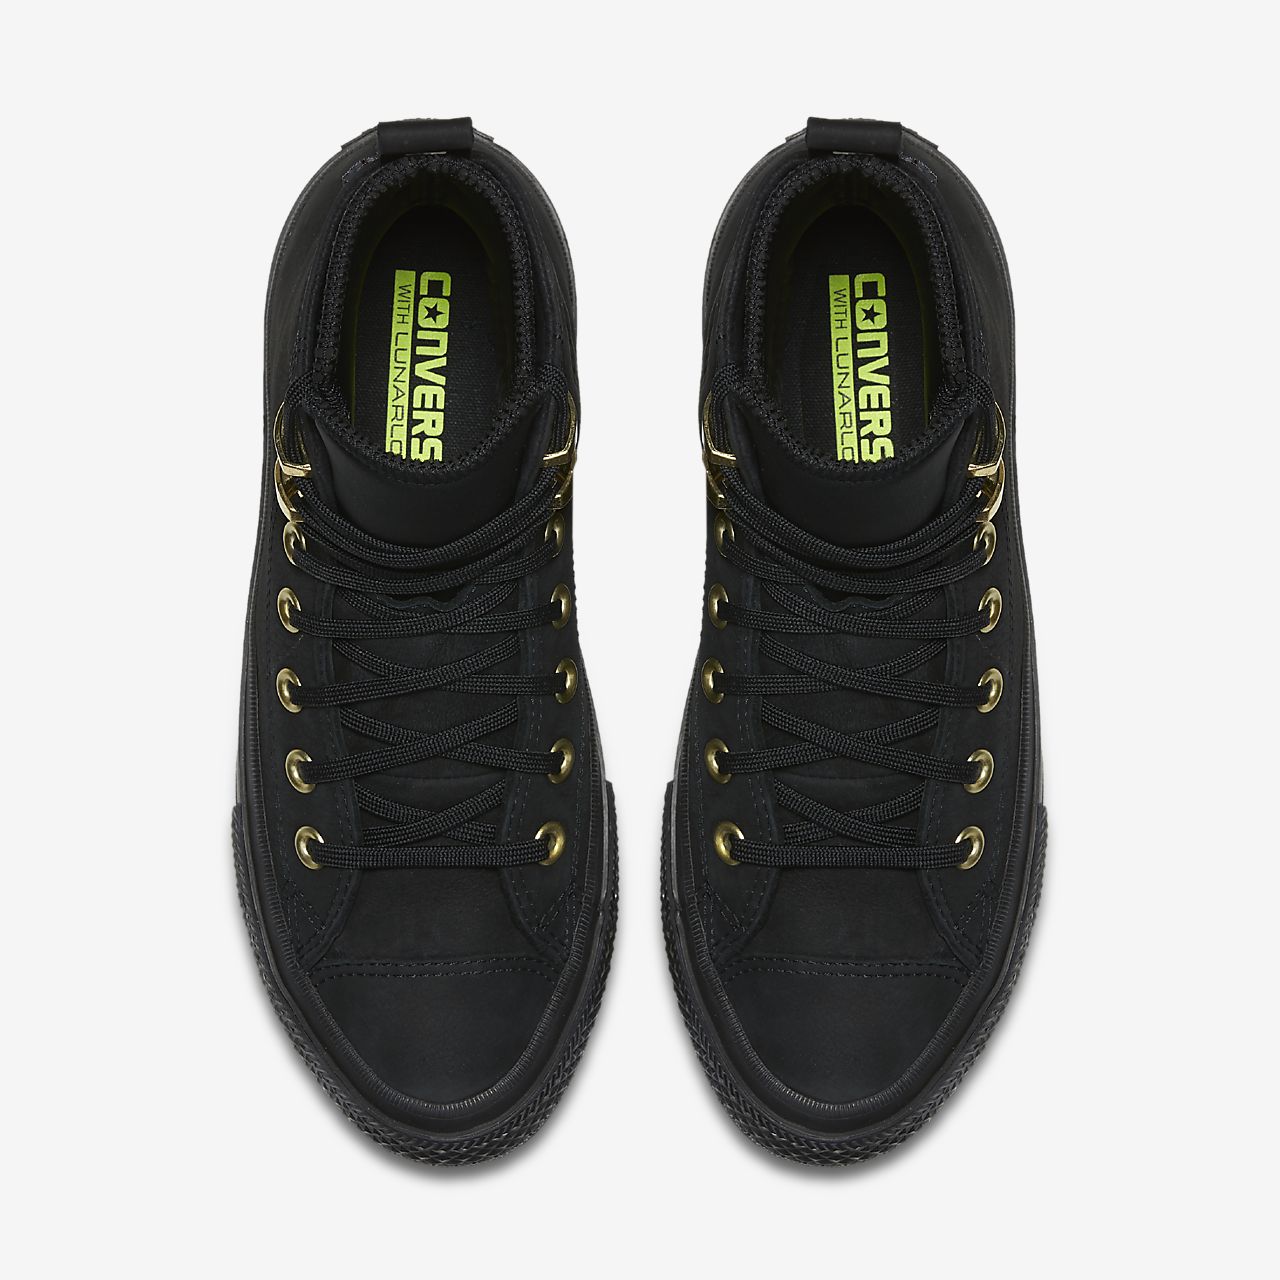 converse chuck taylor waterproof nubuck leather sneakers